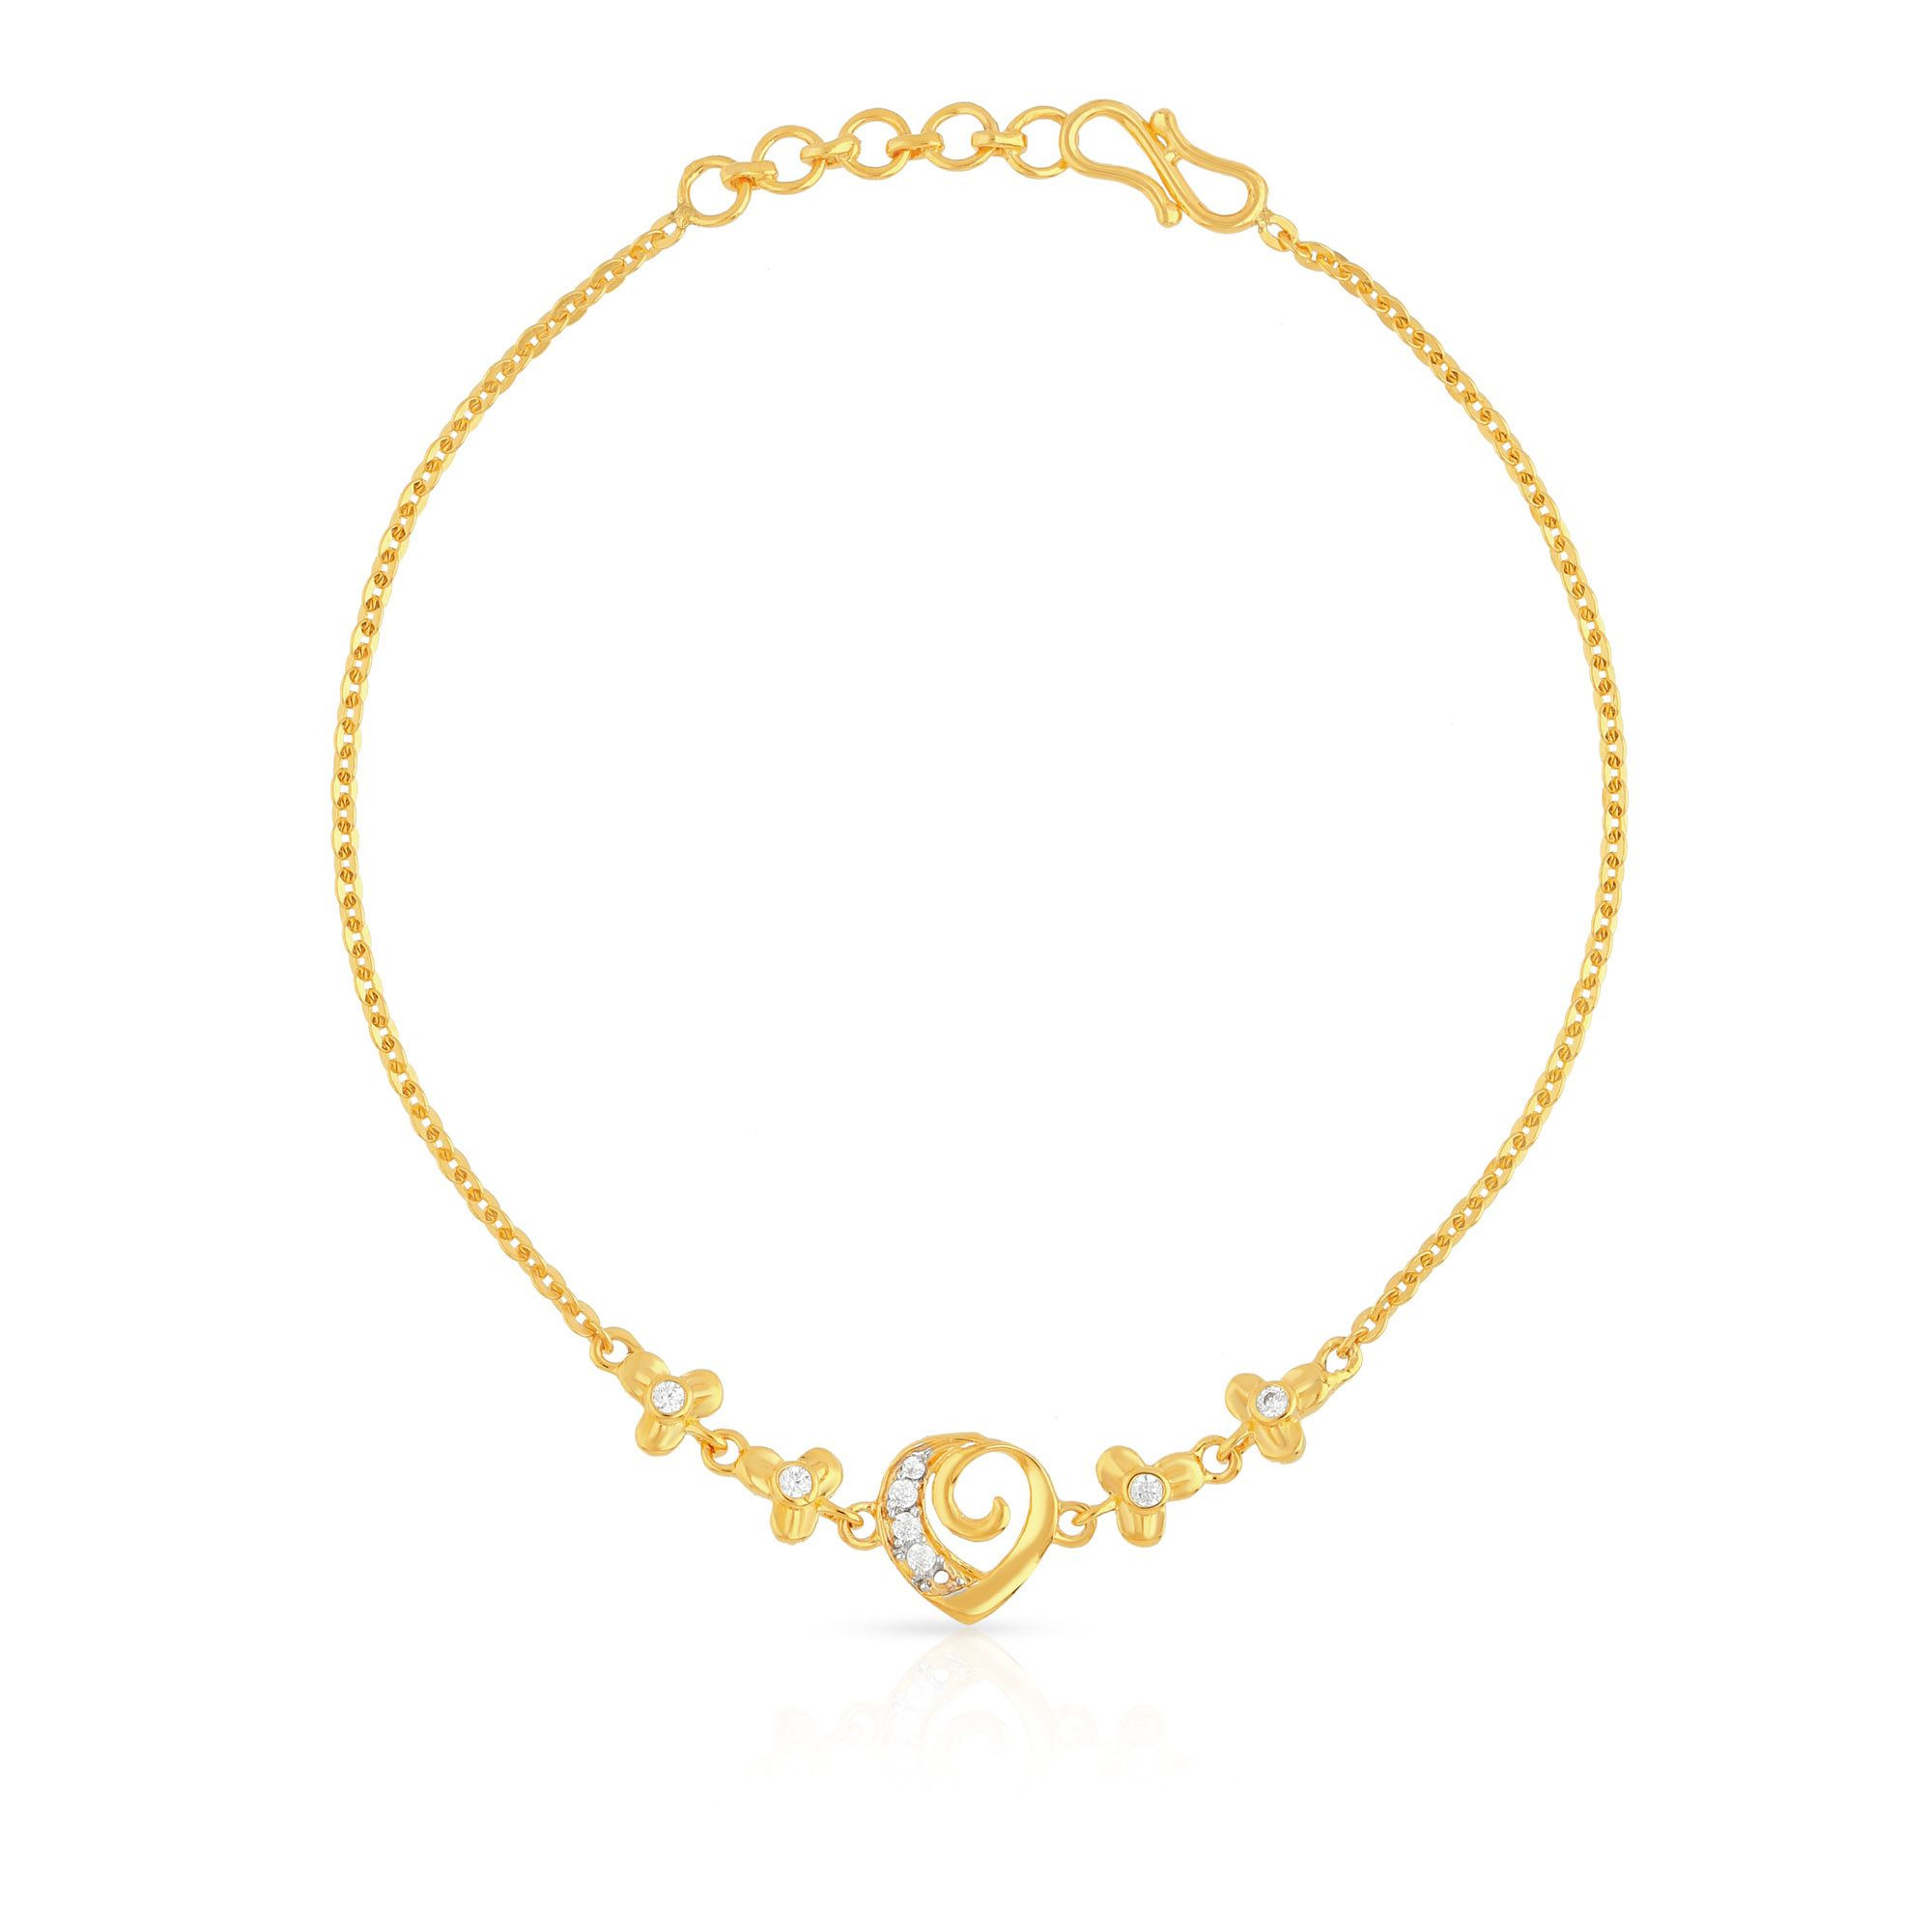 Bangle Bracelet in 22ct Gold with Rhodium Finish | PureJewels UK